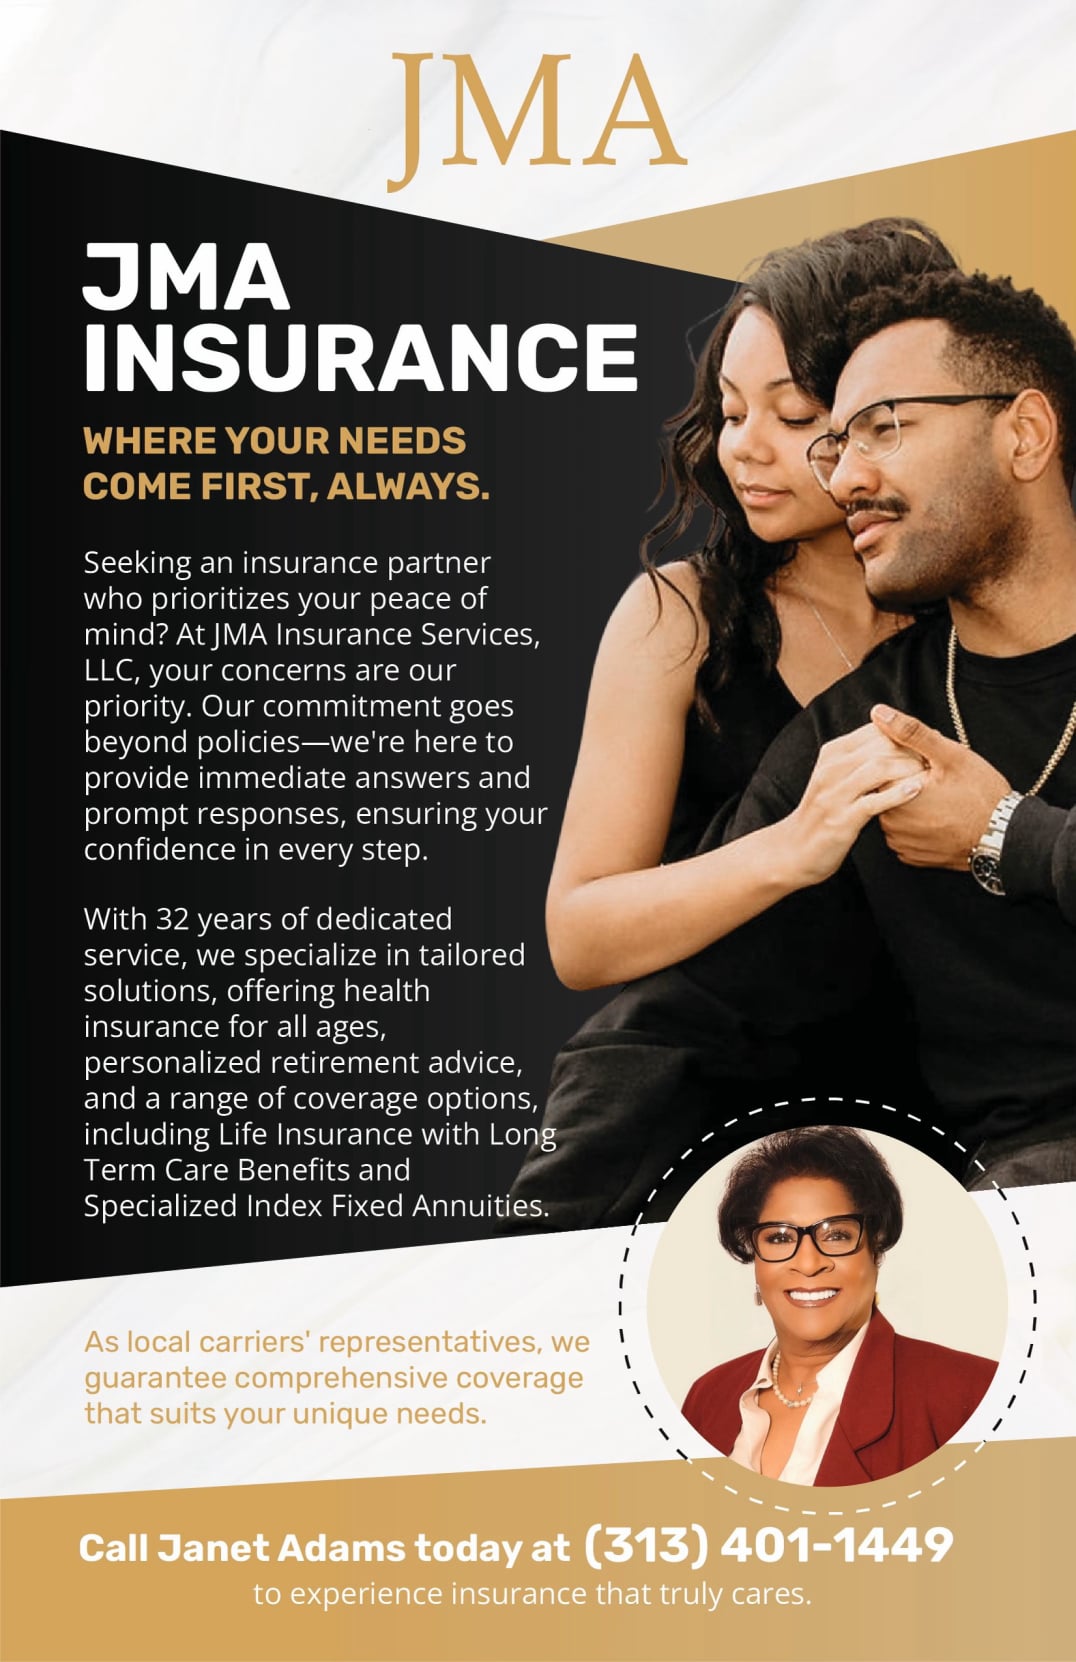 JMA Insurance Services LLC